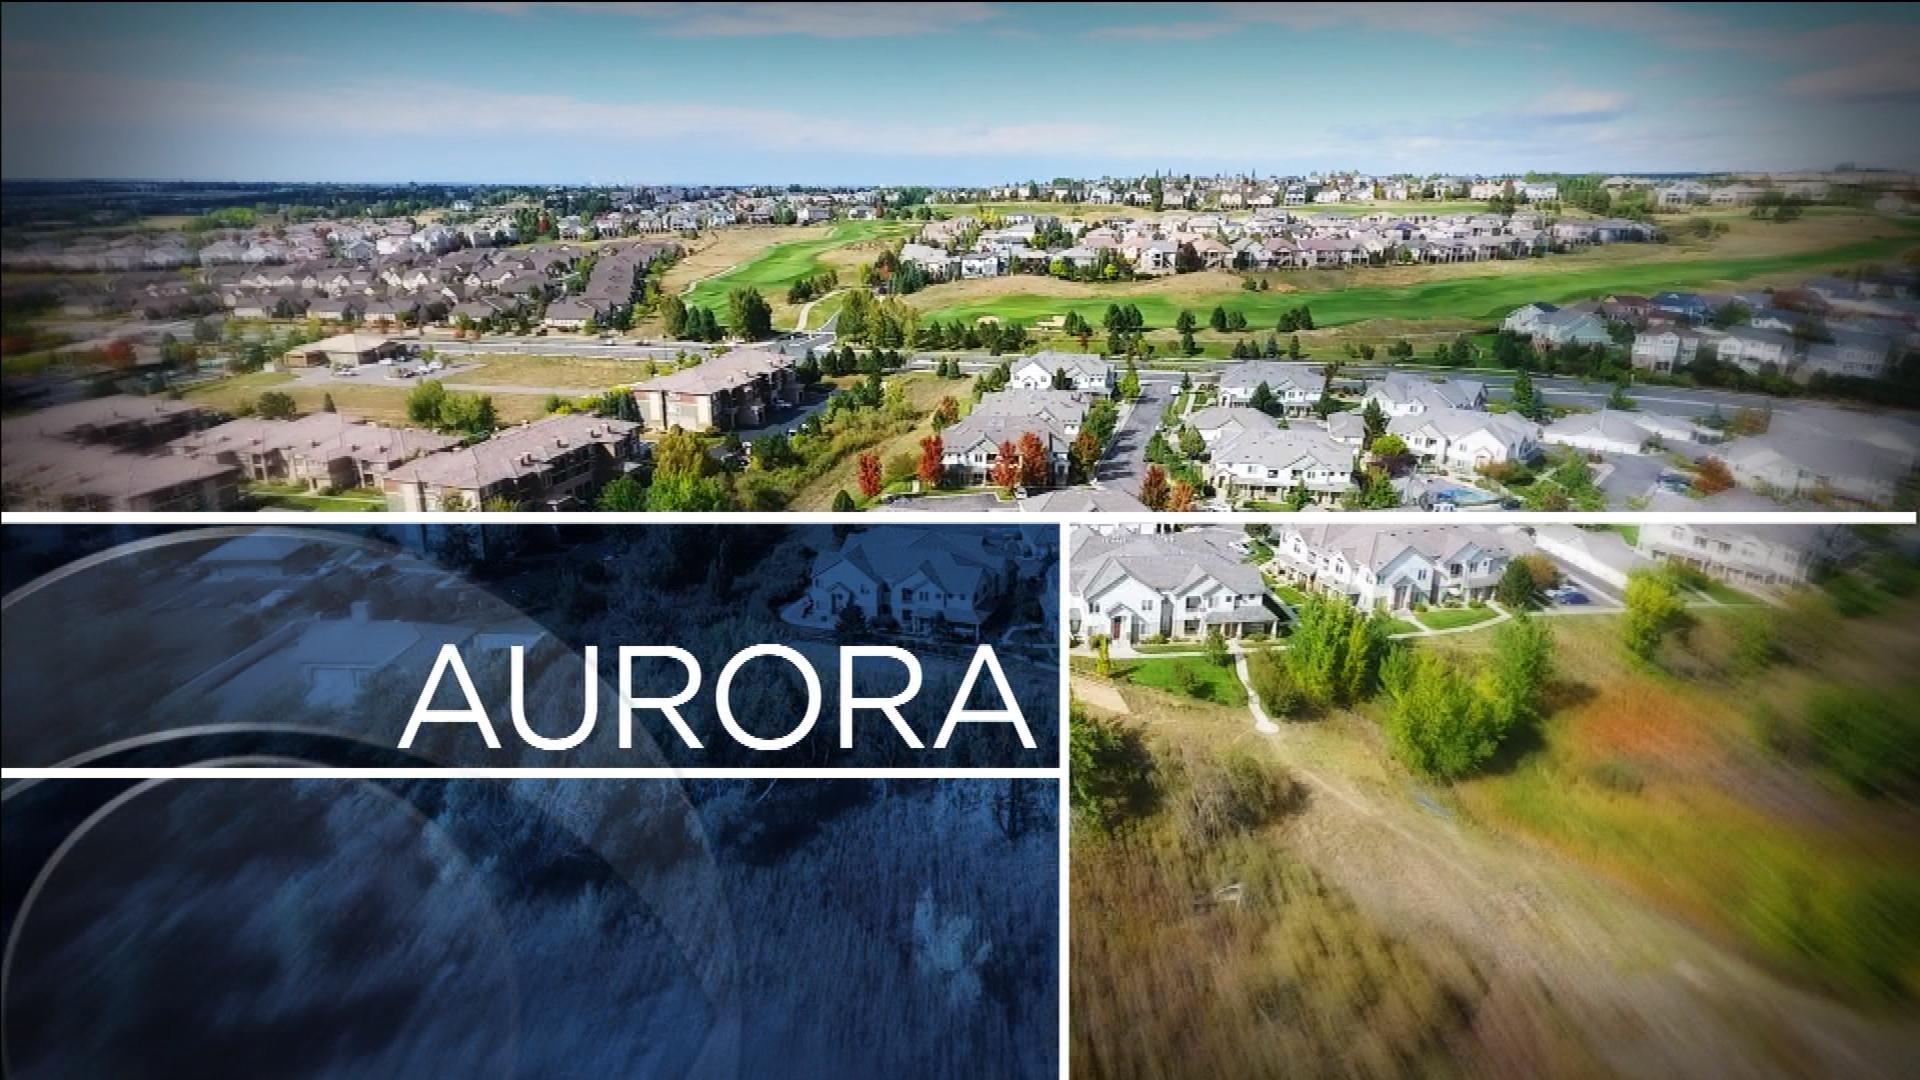 3 Hurt In Monday Morning Shooting In Aurora